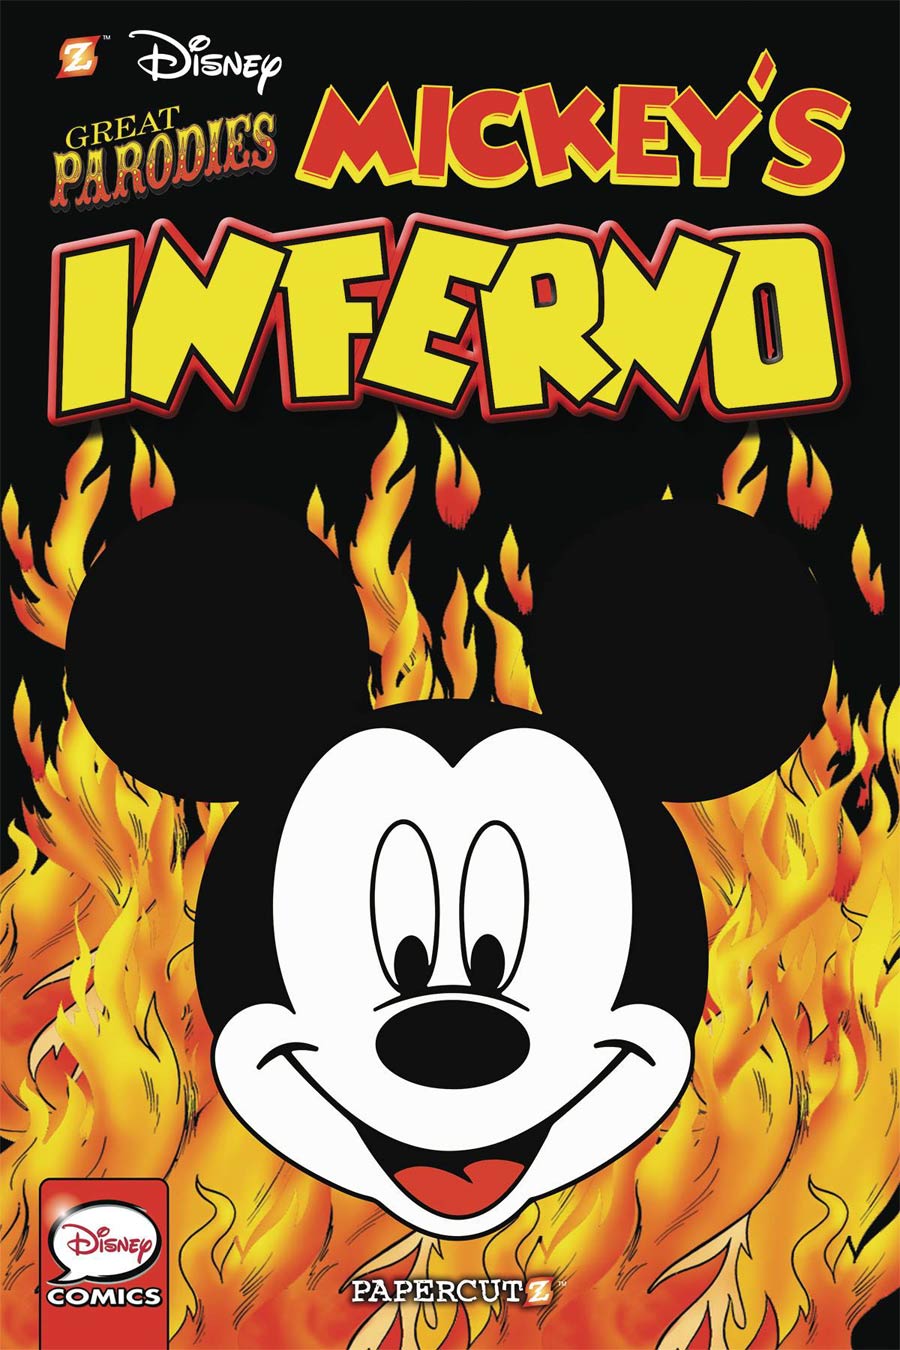 Disney Great Parodies Vol 1 Mickeys Inferno HC